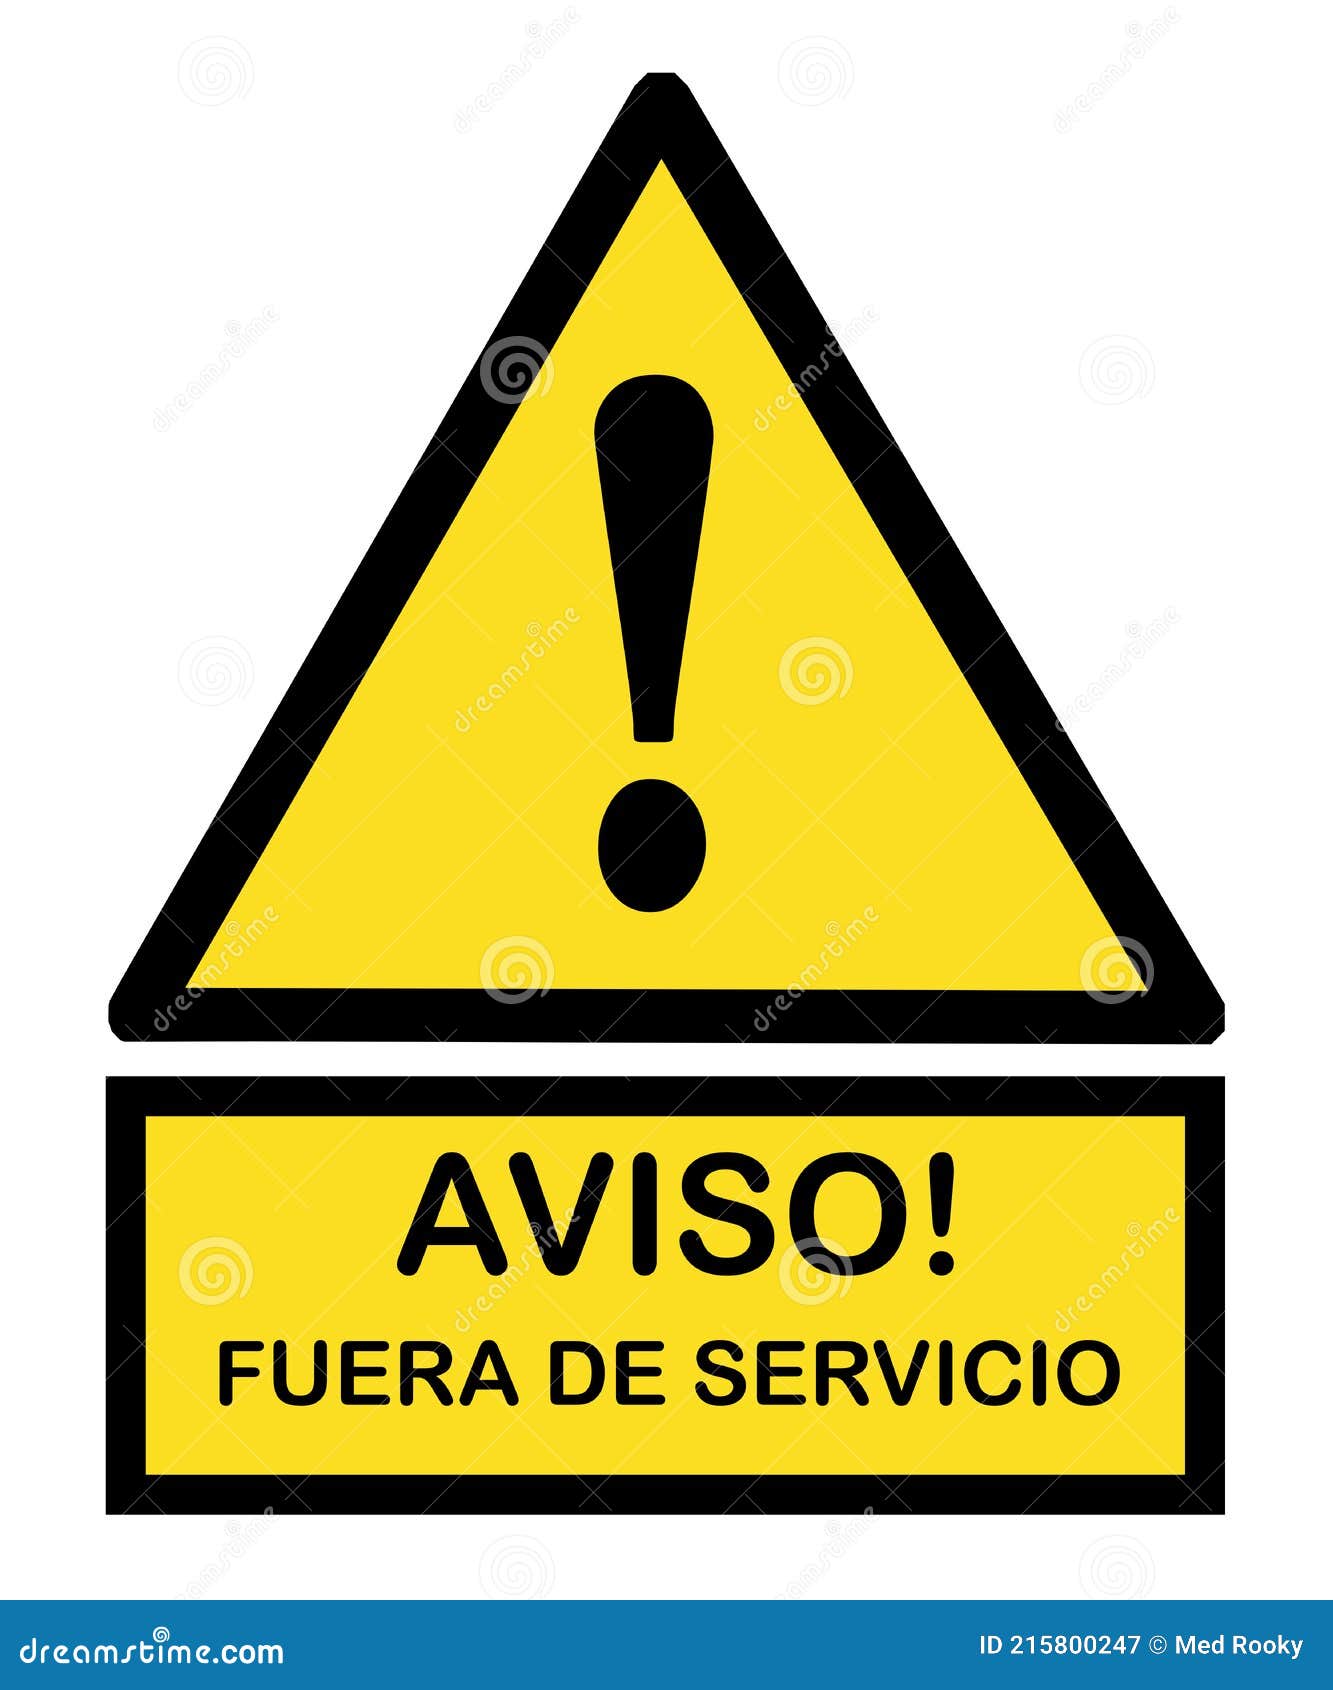 aviso fuera de servicio out of order in spanish